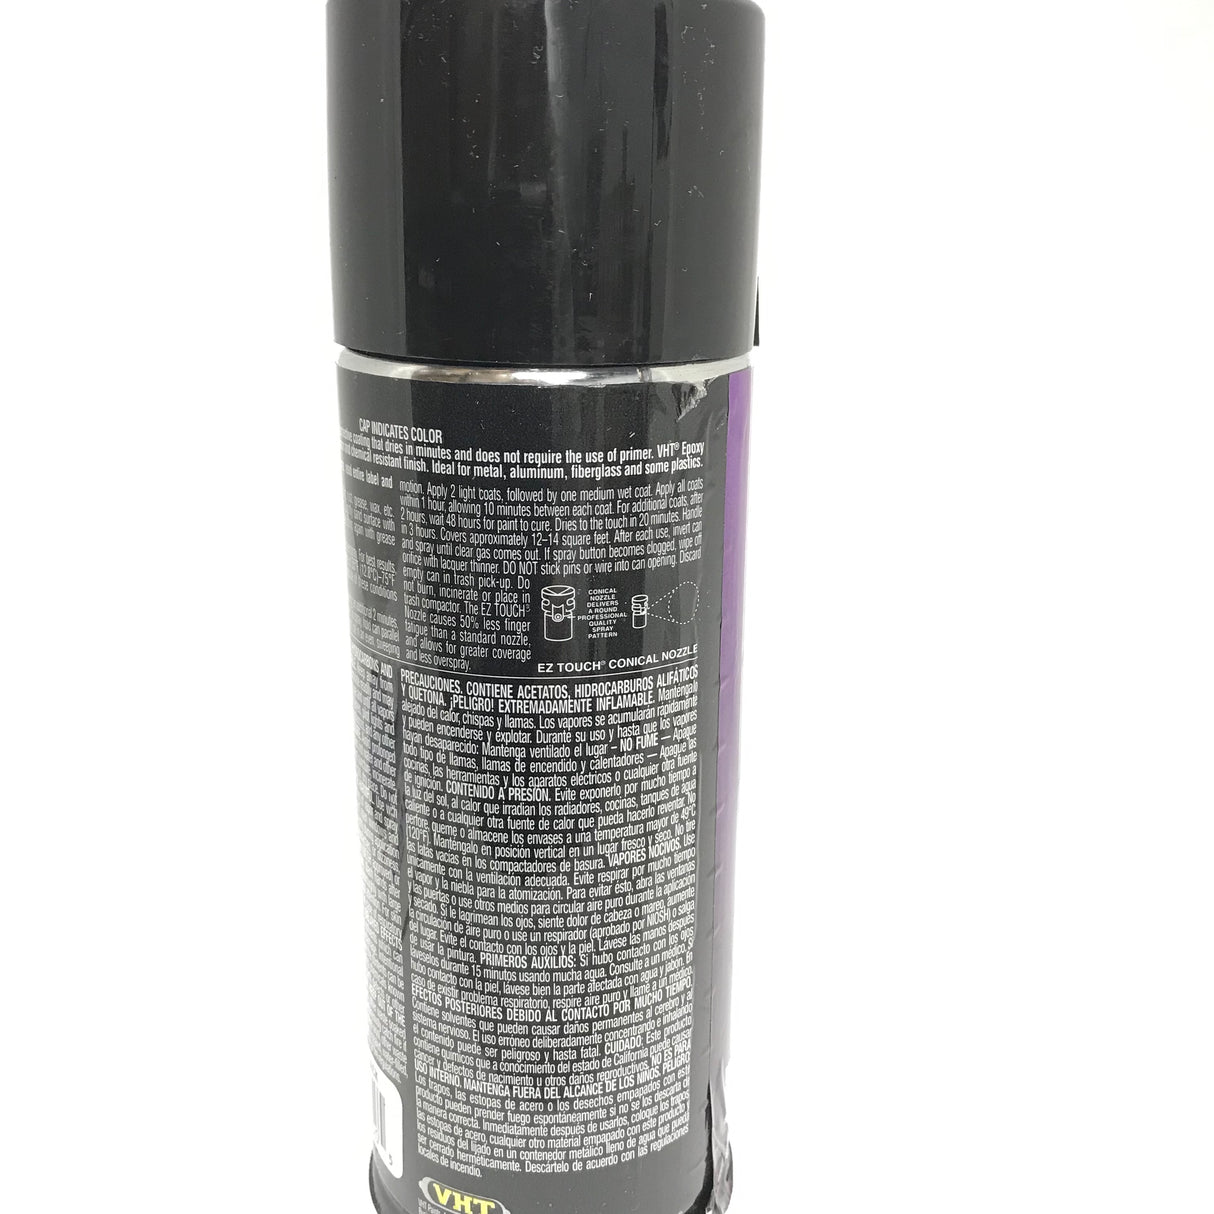 VHT SP650 GLOSS BLACK Epoxy Paint. Rust and Salt Resistant - 11 oz